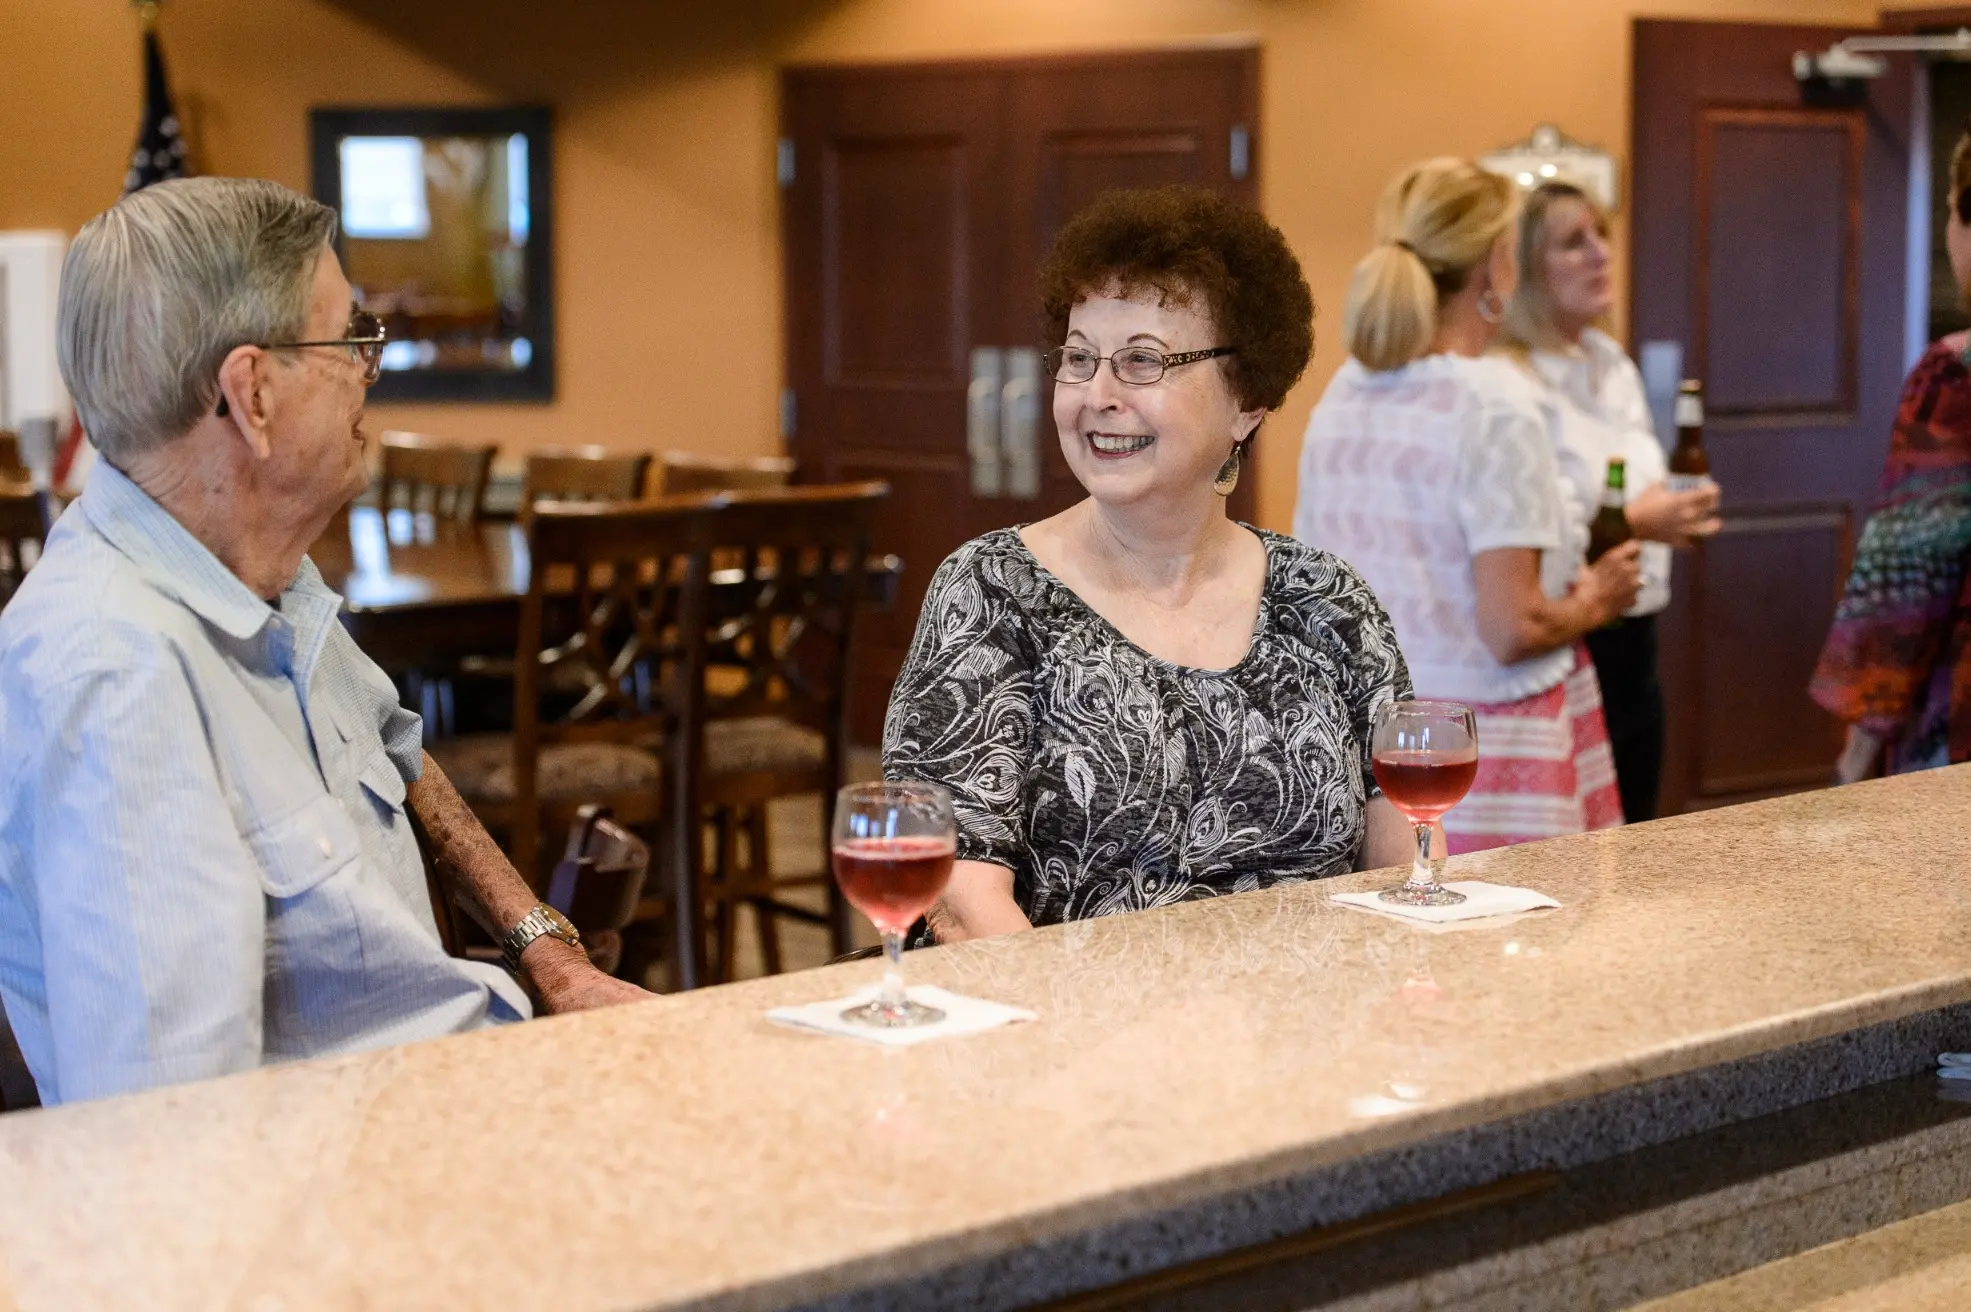 Seniors at the bar / common area of a senior living community in Niceville, FL